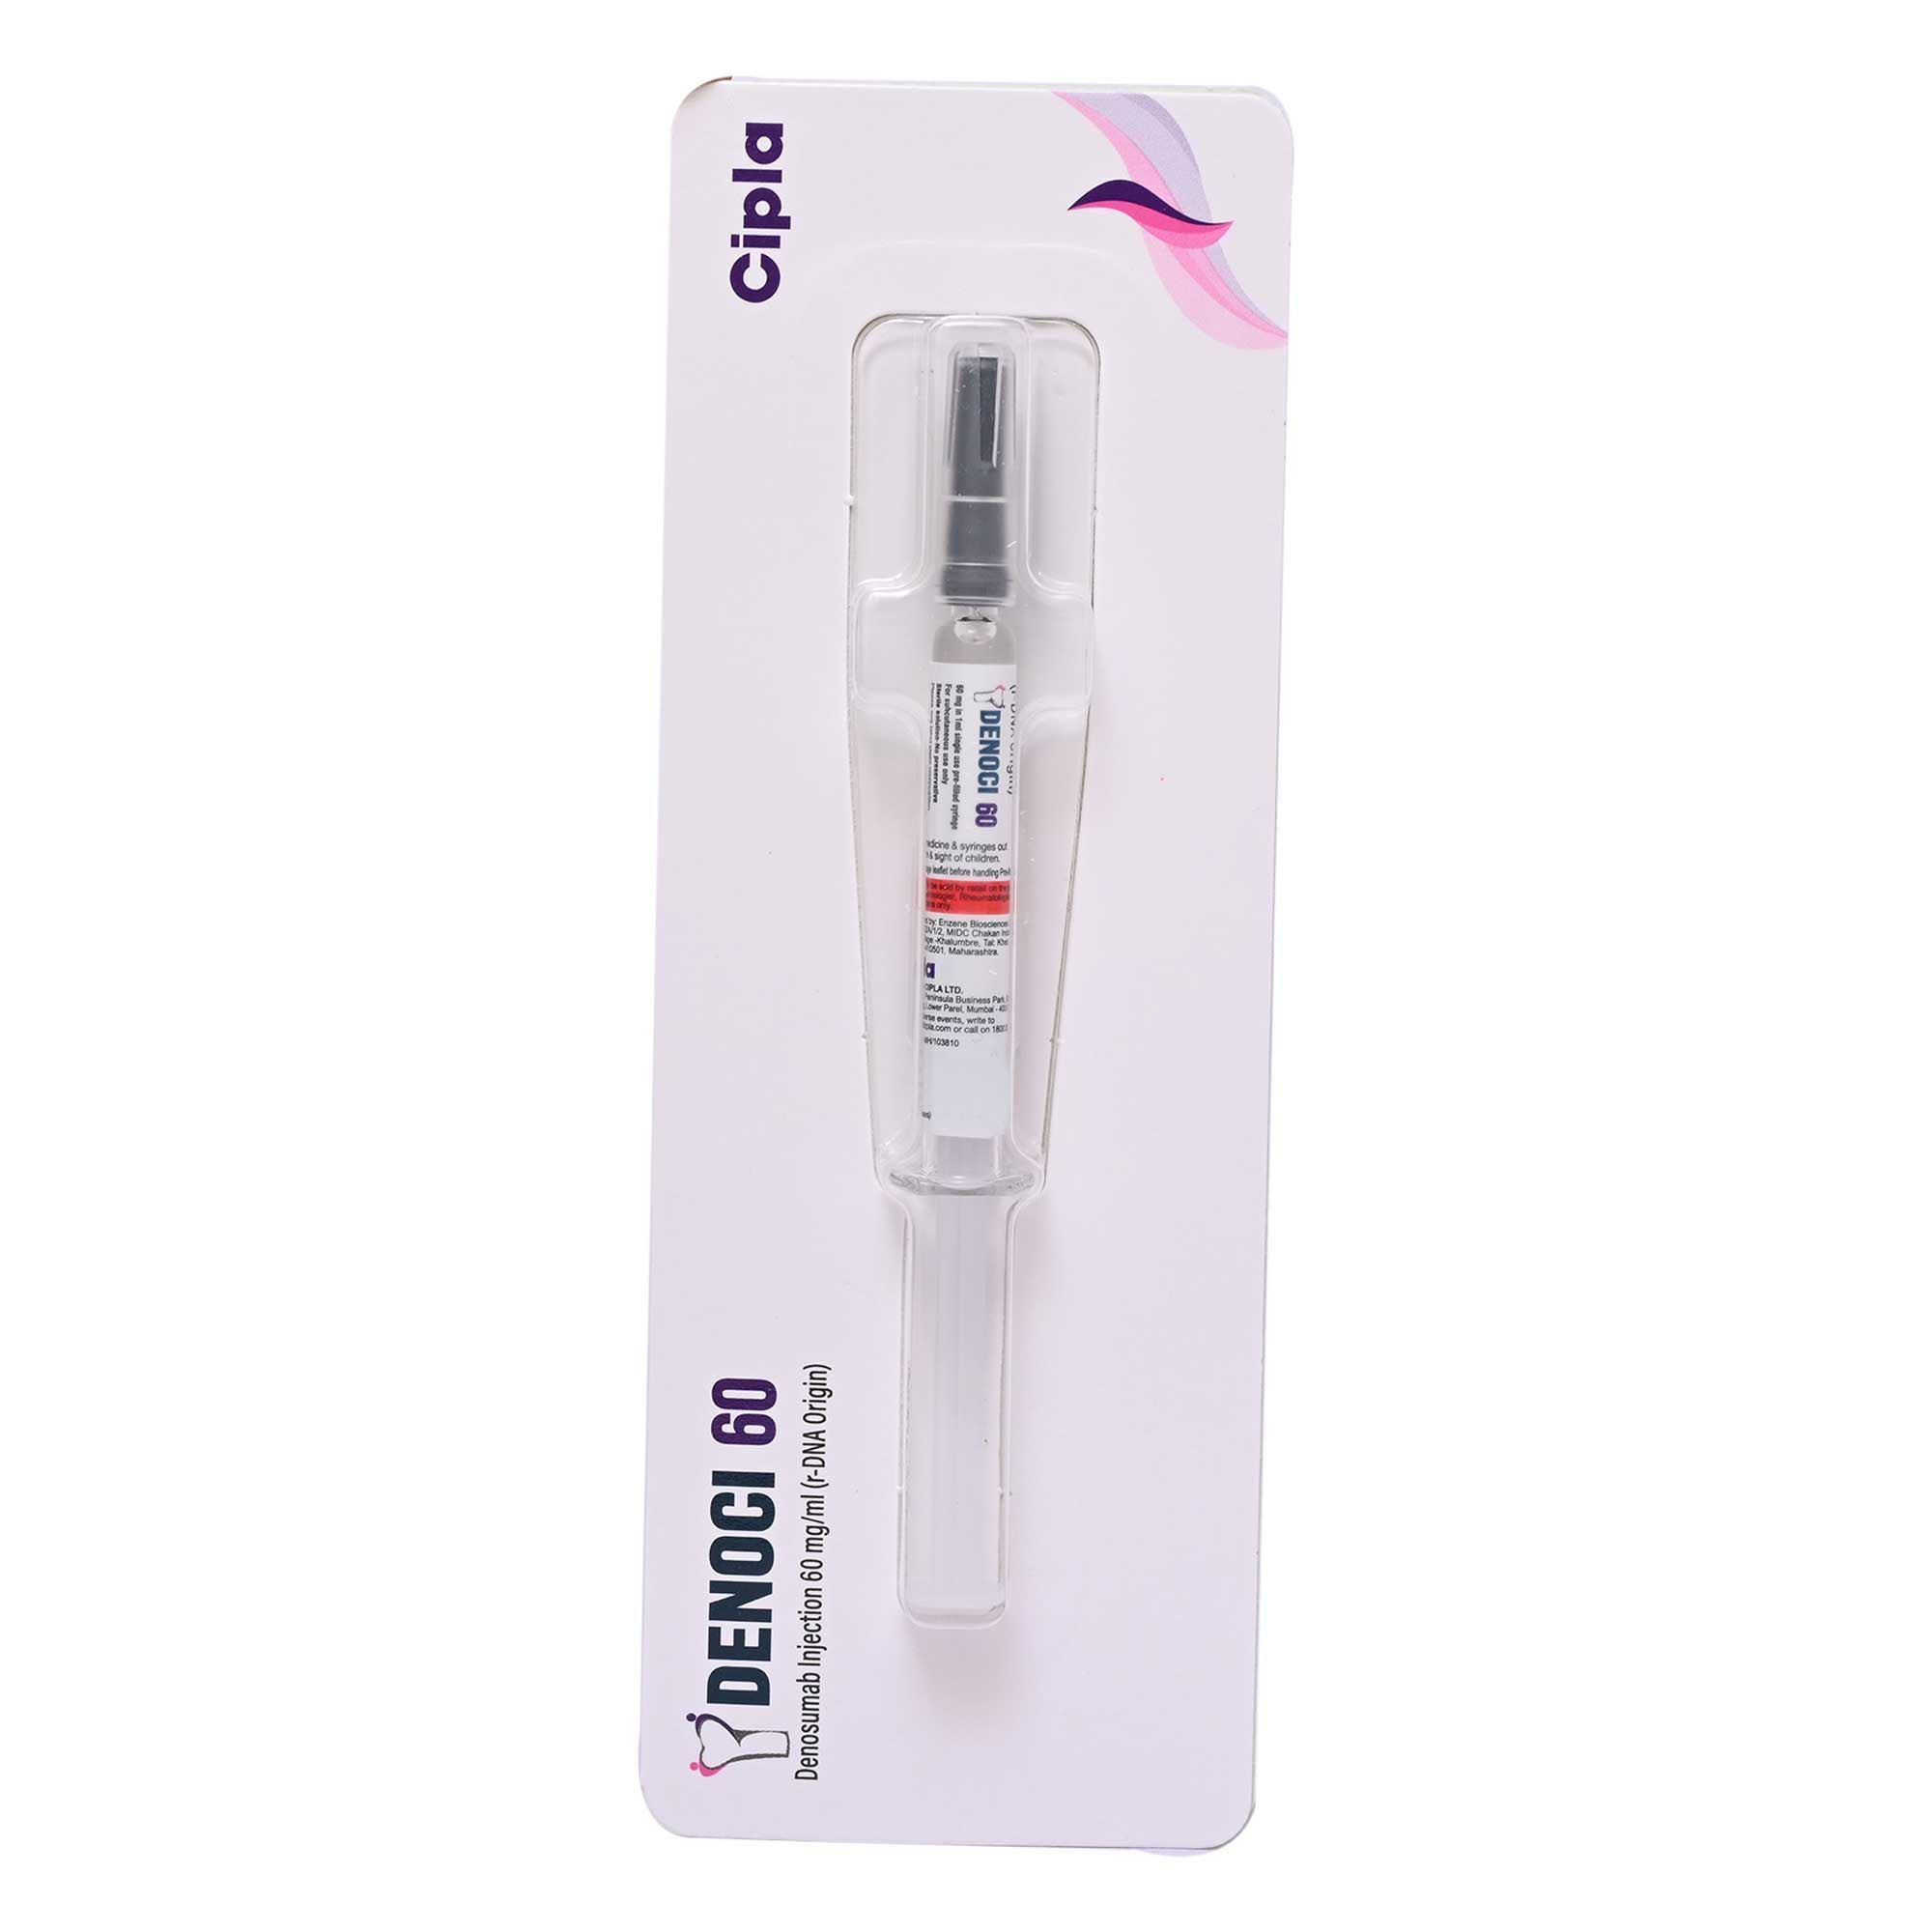 Buy Denoci 60 Injection 1 ml Online